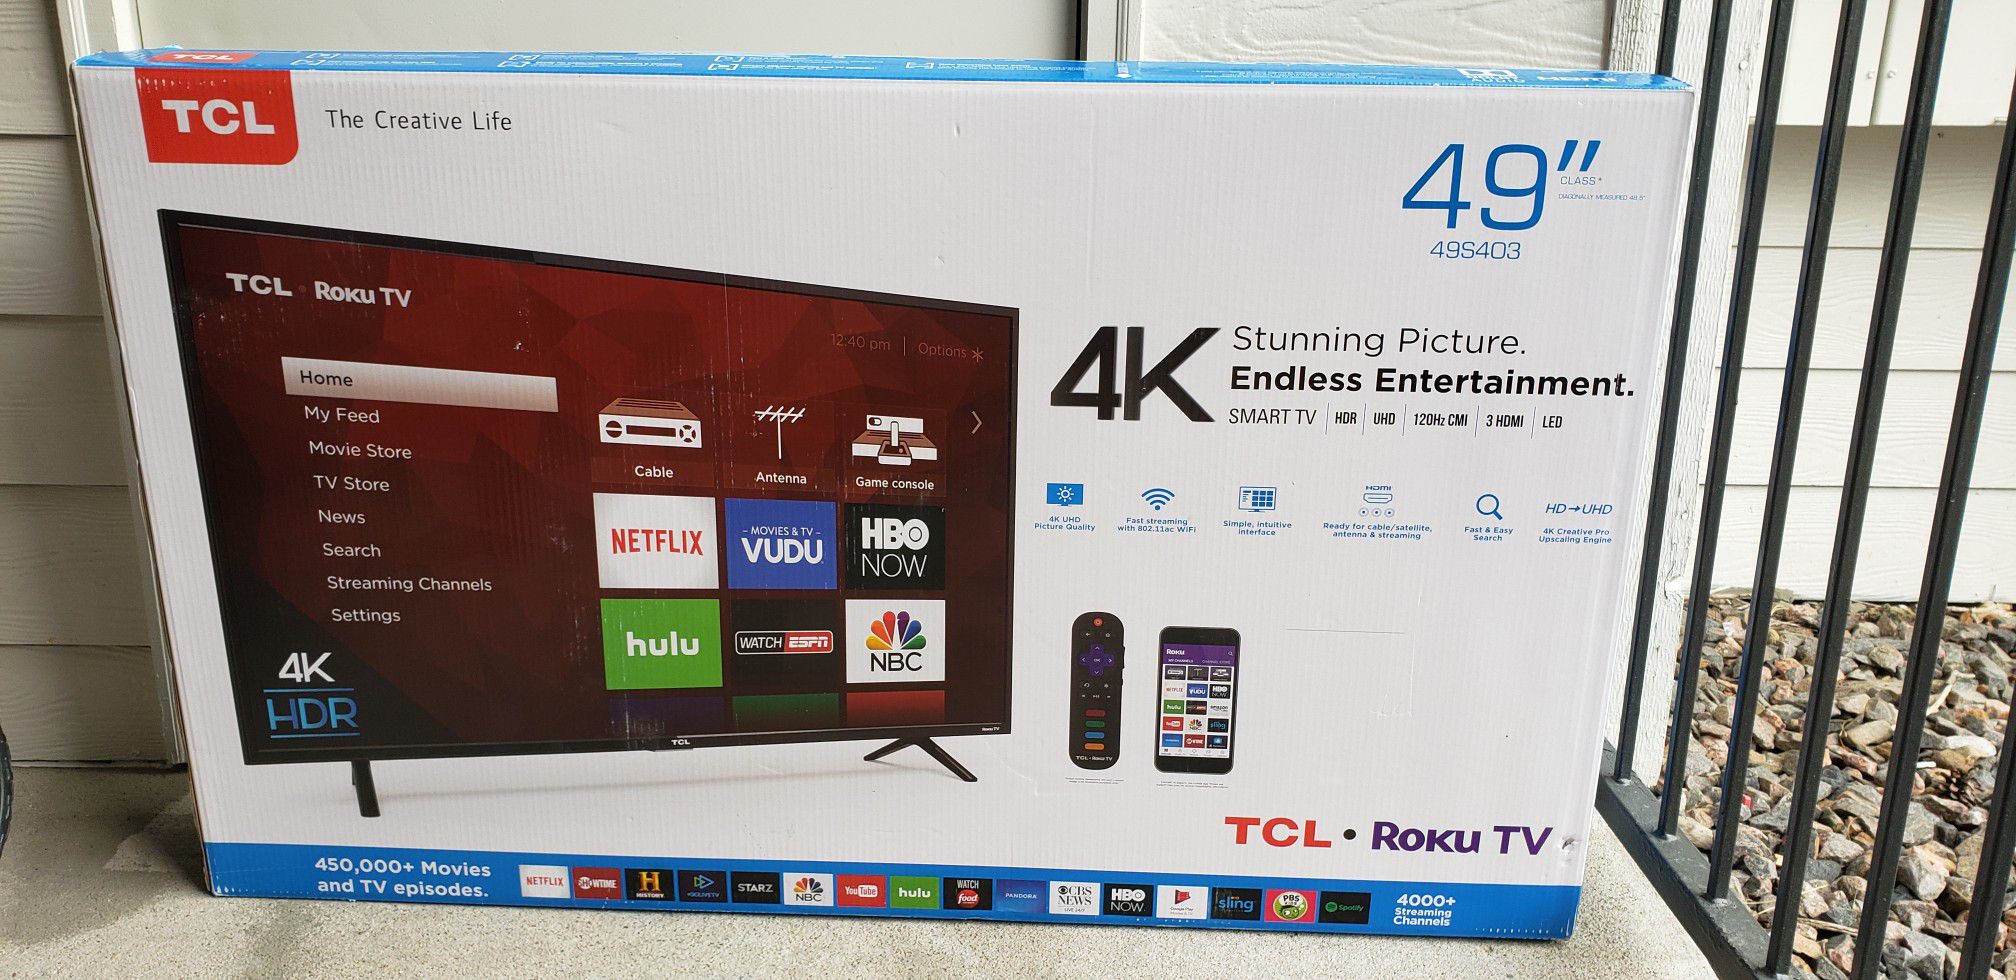 TCL 49" (Model - 49S403) 4K UHD TV Roku smart TV with additional roku remote